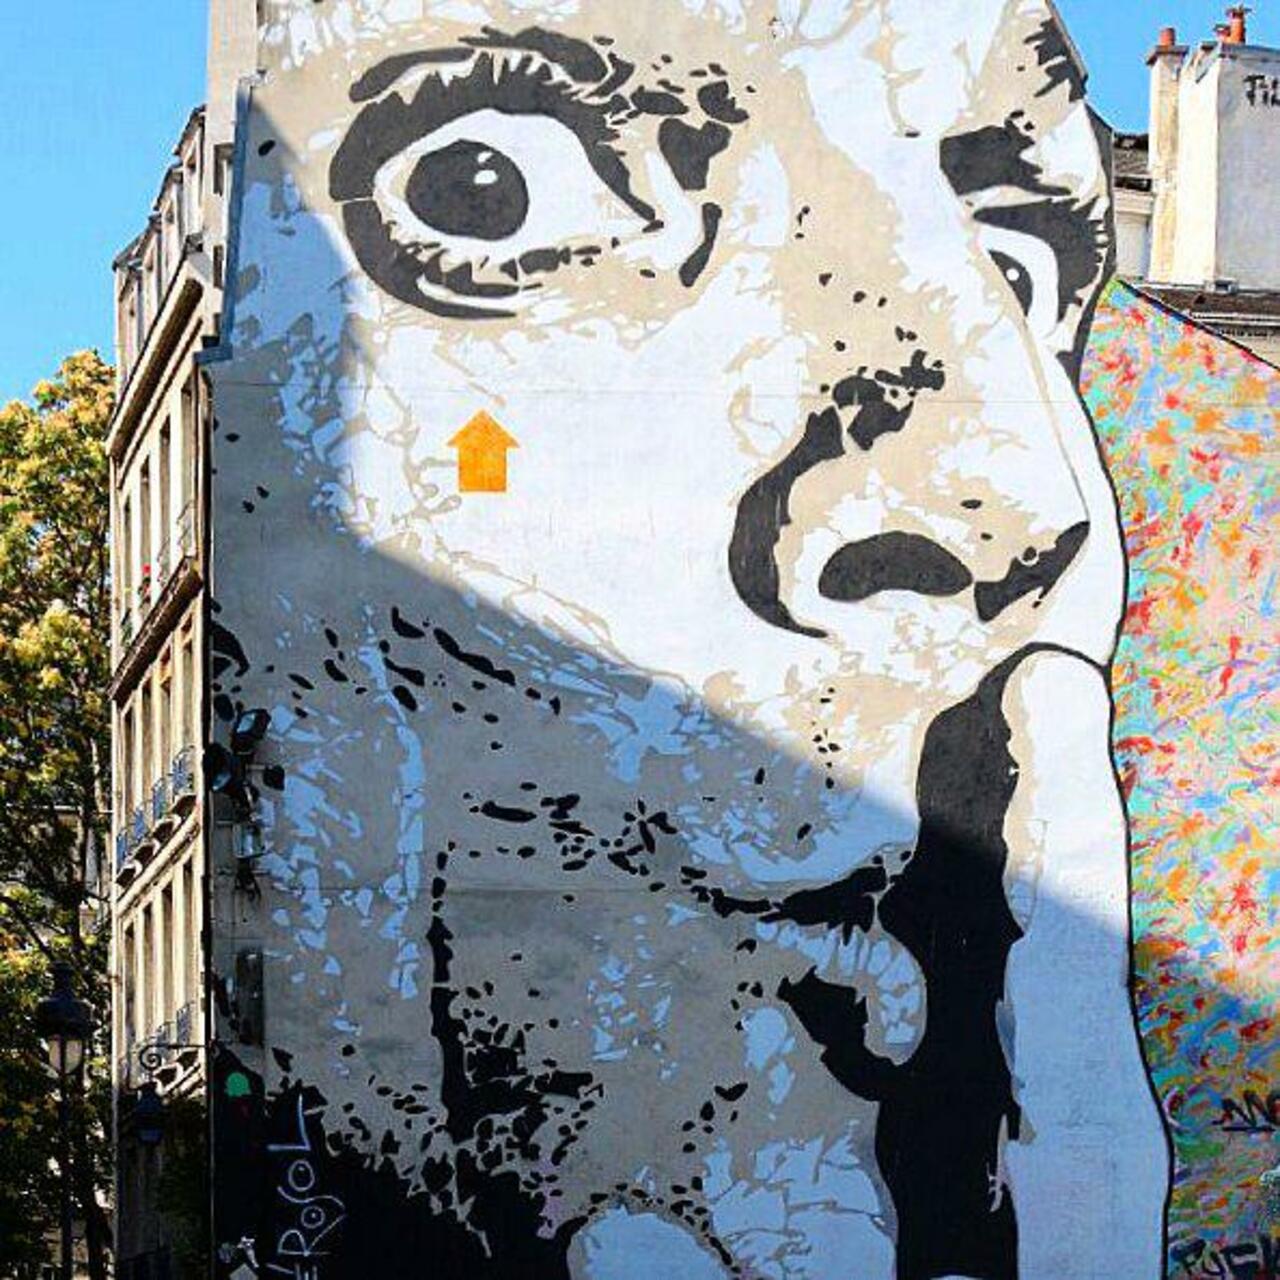 circumjacent_fr: #Paris #graffiti photo by jpoesse http://ift.tt/1j5Pupd #StreetArt http://t.co/MvpGWRx1lC